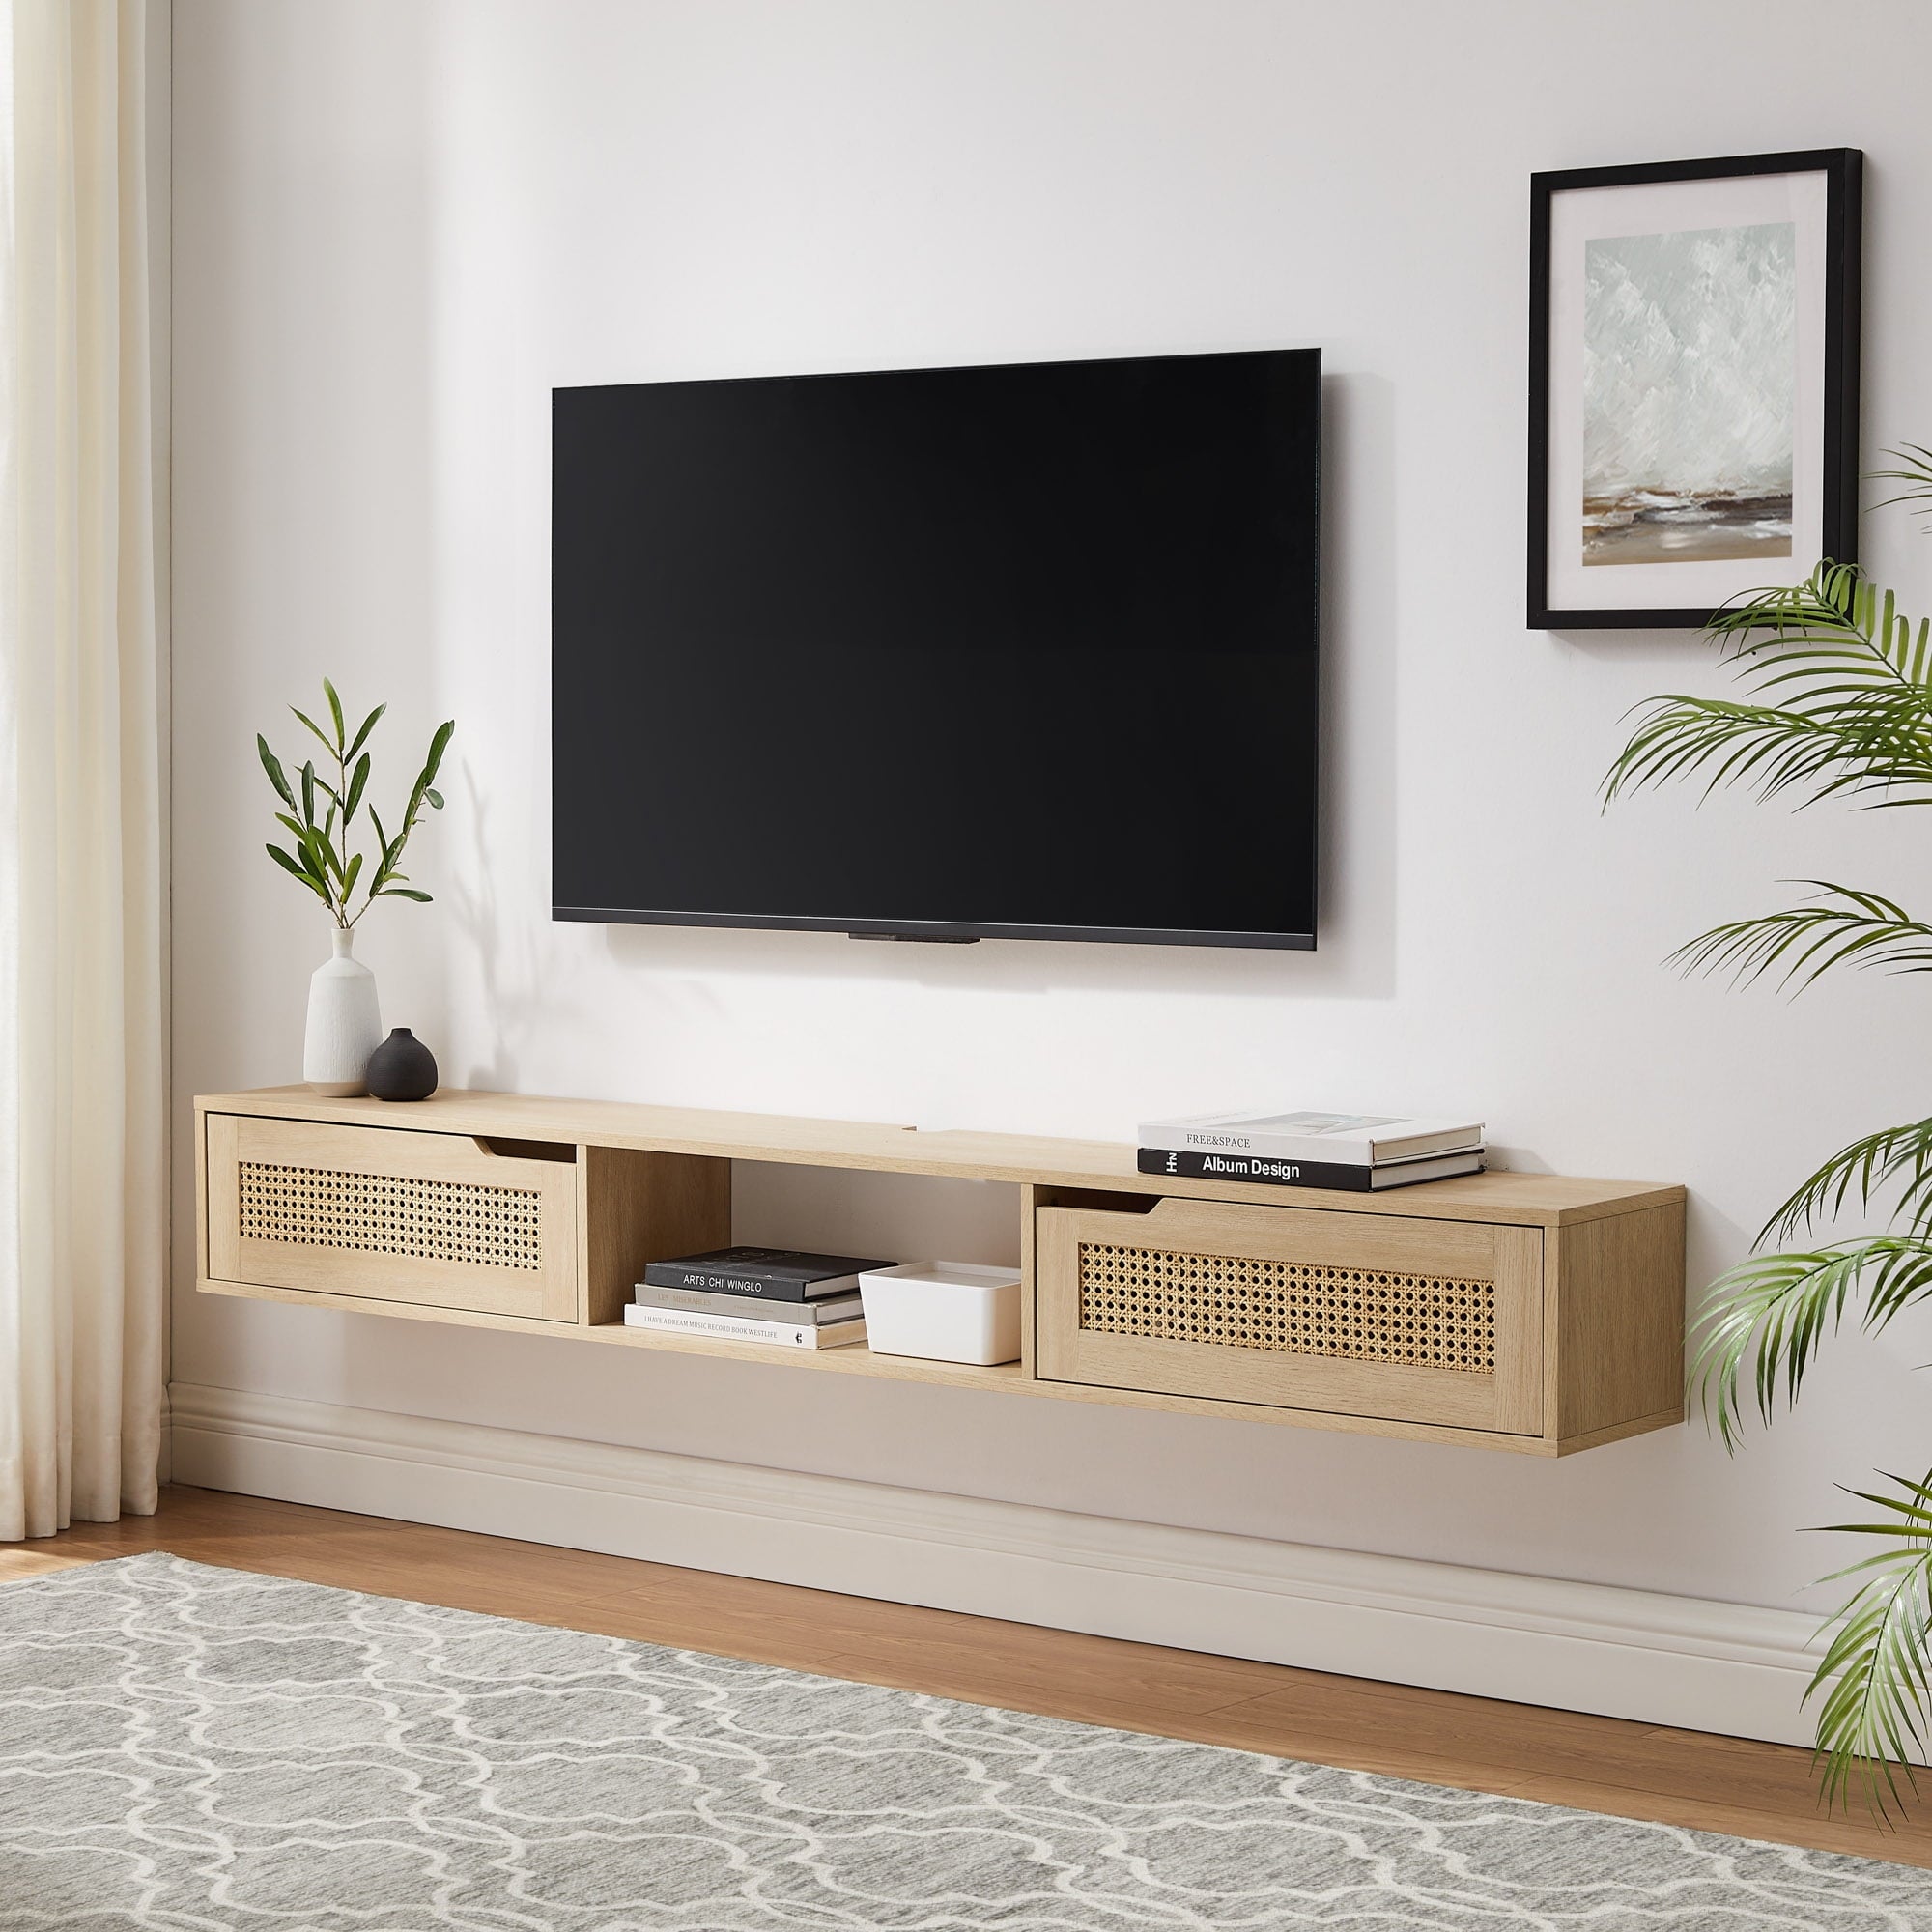 Manor Park Modern Rattan-Door Floating TV Stand for TVs Up To 80” Black Living Room Furniture  Modern Tv Stand  Tv Cabinet